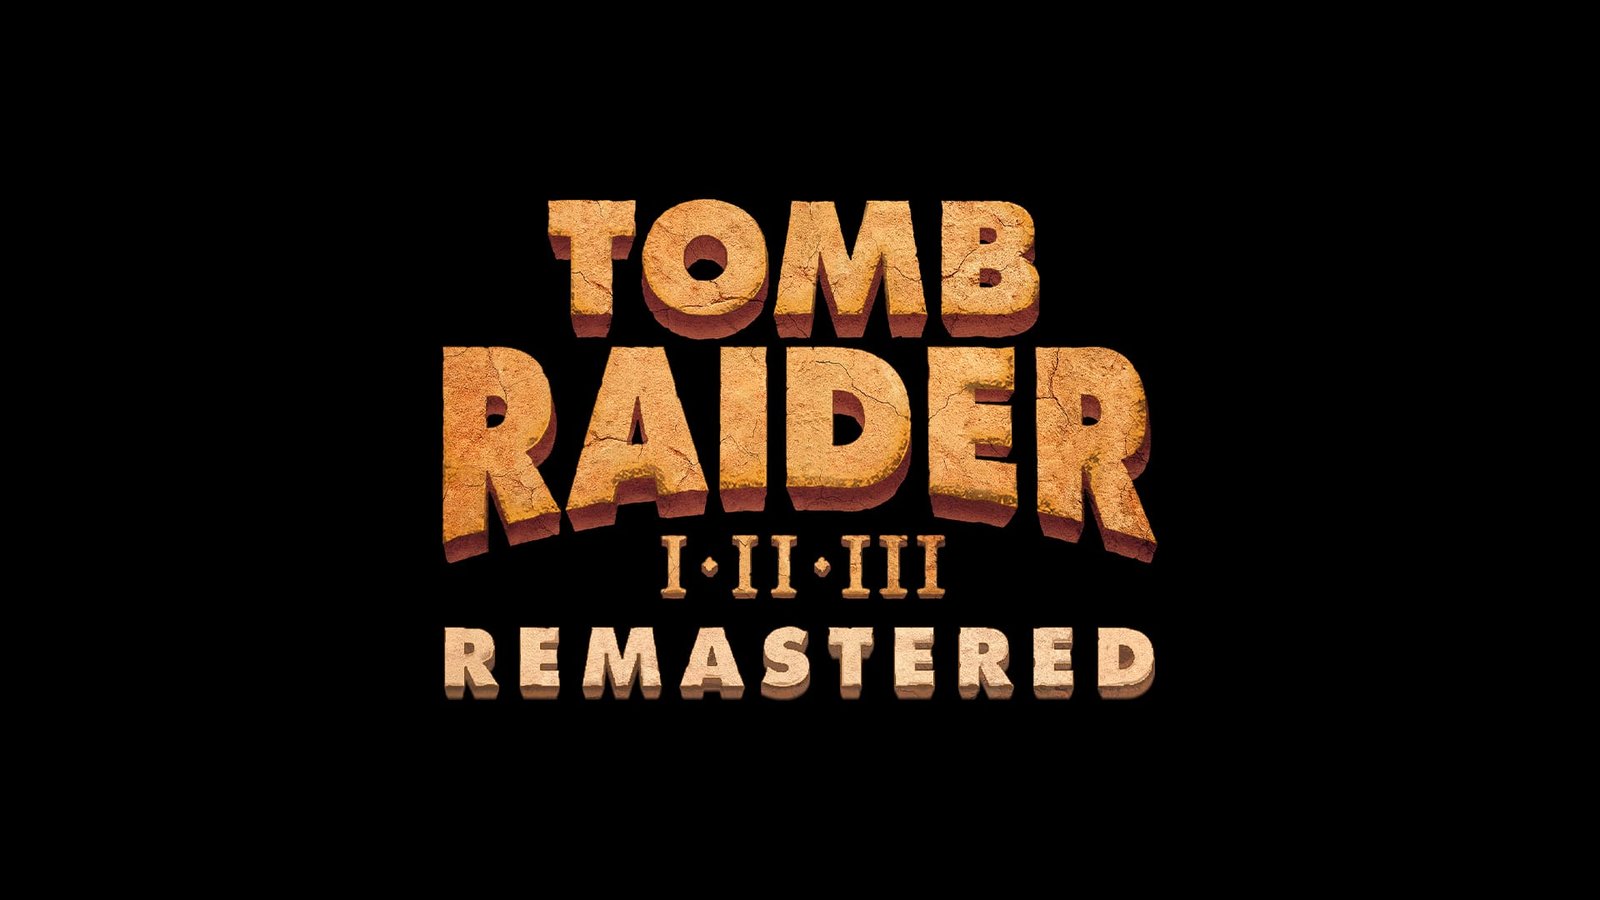 Tomb Raider I-III Remastered : Lara Croft fait son retour sur Nintendo Switch, autres consoles et PC